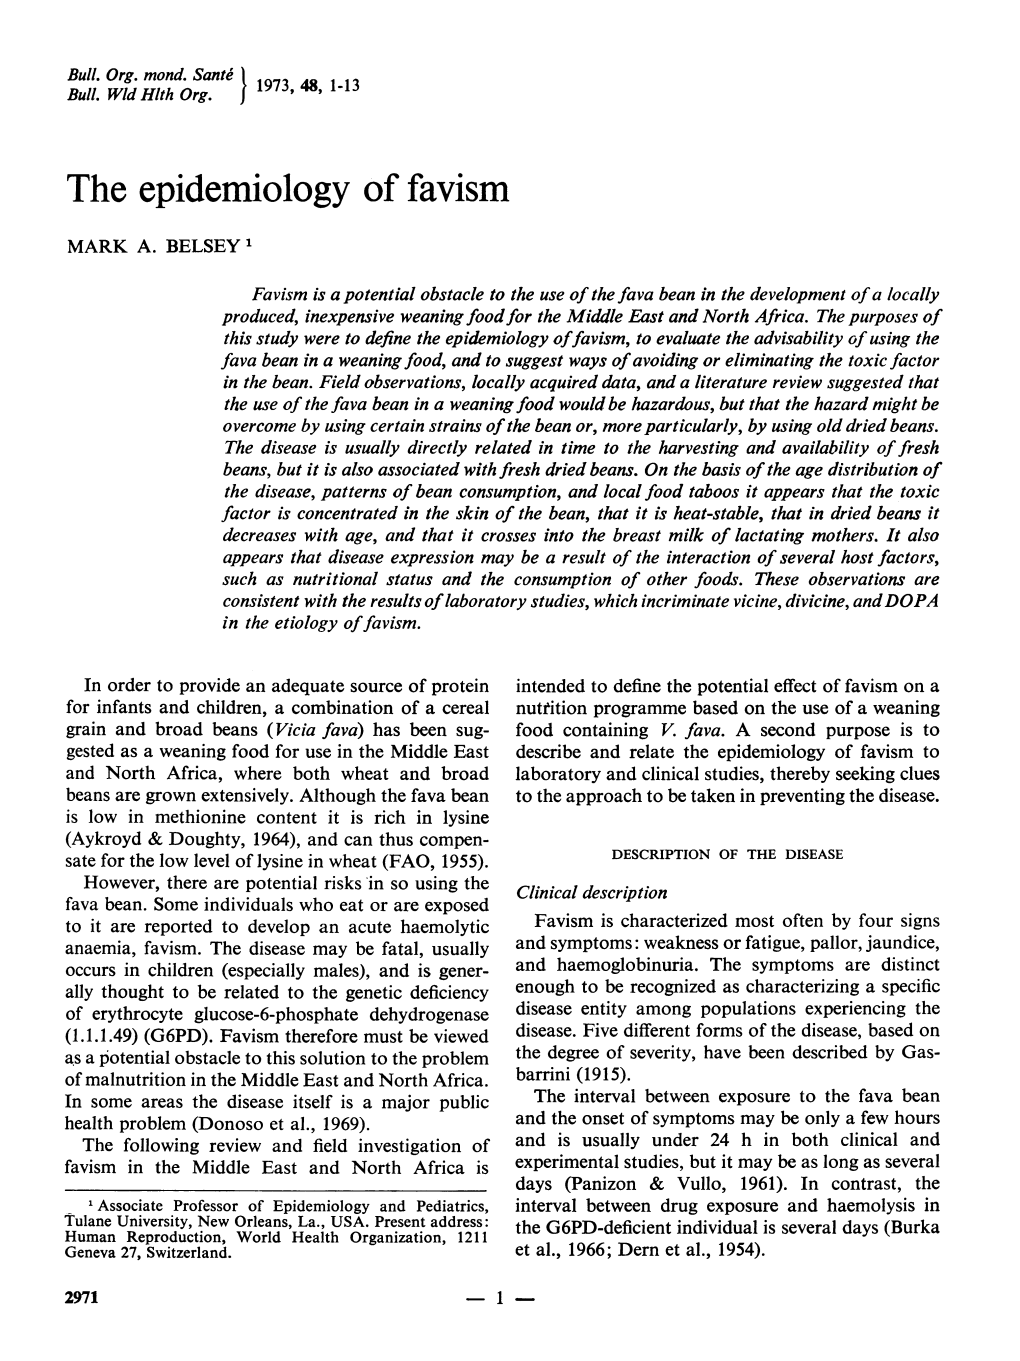 The Epidemiology of Favism